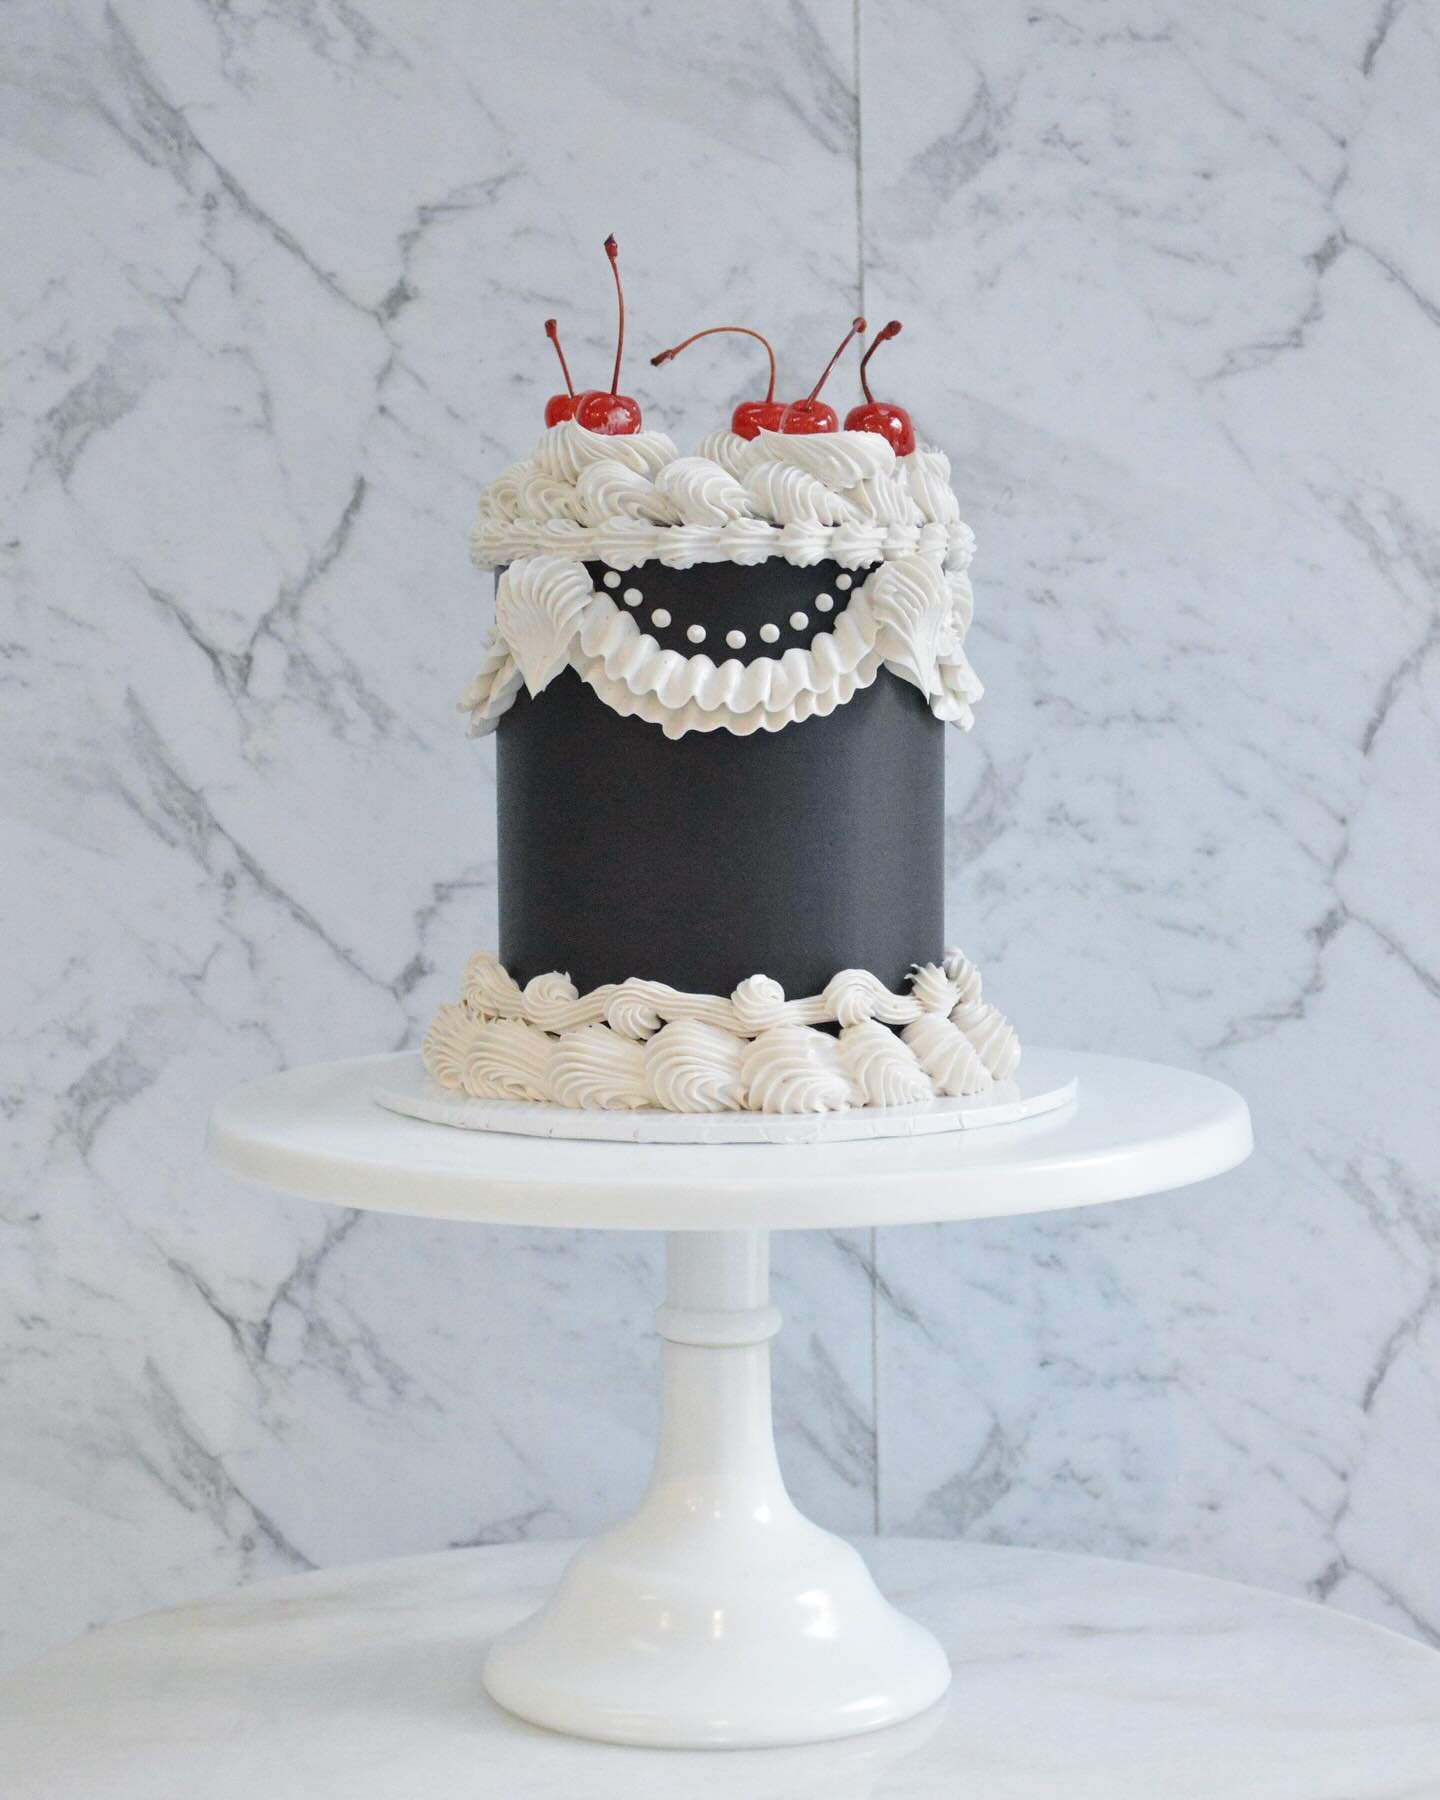 ❤️ B L A C K &amp;  W H I T E ❤️
A black and white vintage cake! I love the pop the cherries give on this one 🍒
.
.
.
.
.
#cake #cakes #vintage #vintagecake #cakestagram #cakesofig #igcakes #igdaily #cakesdaily #cakesofinsta #cakesofinstagram #melbo